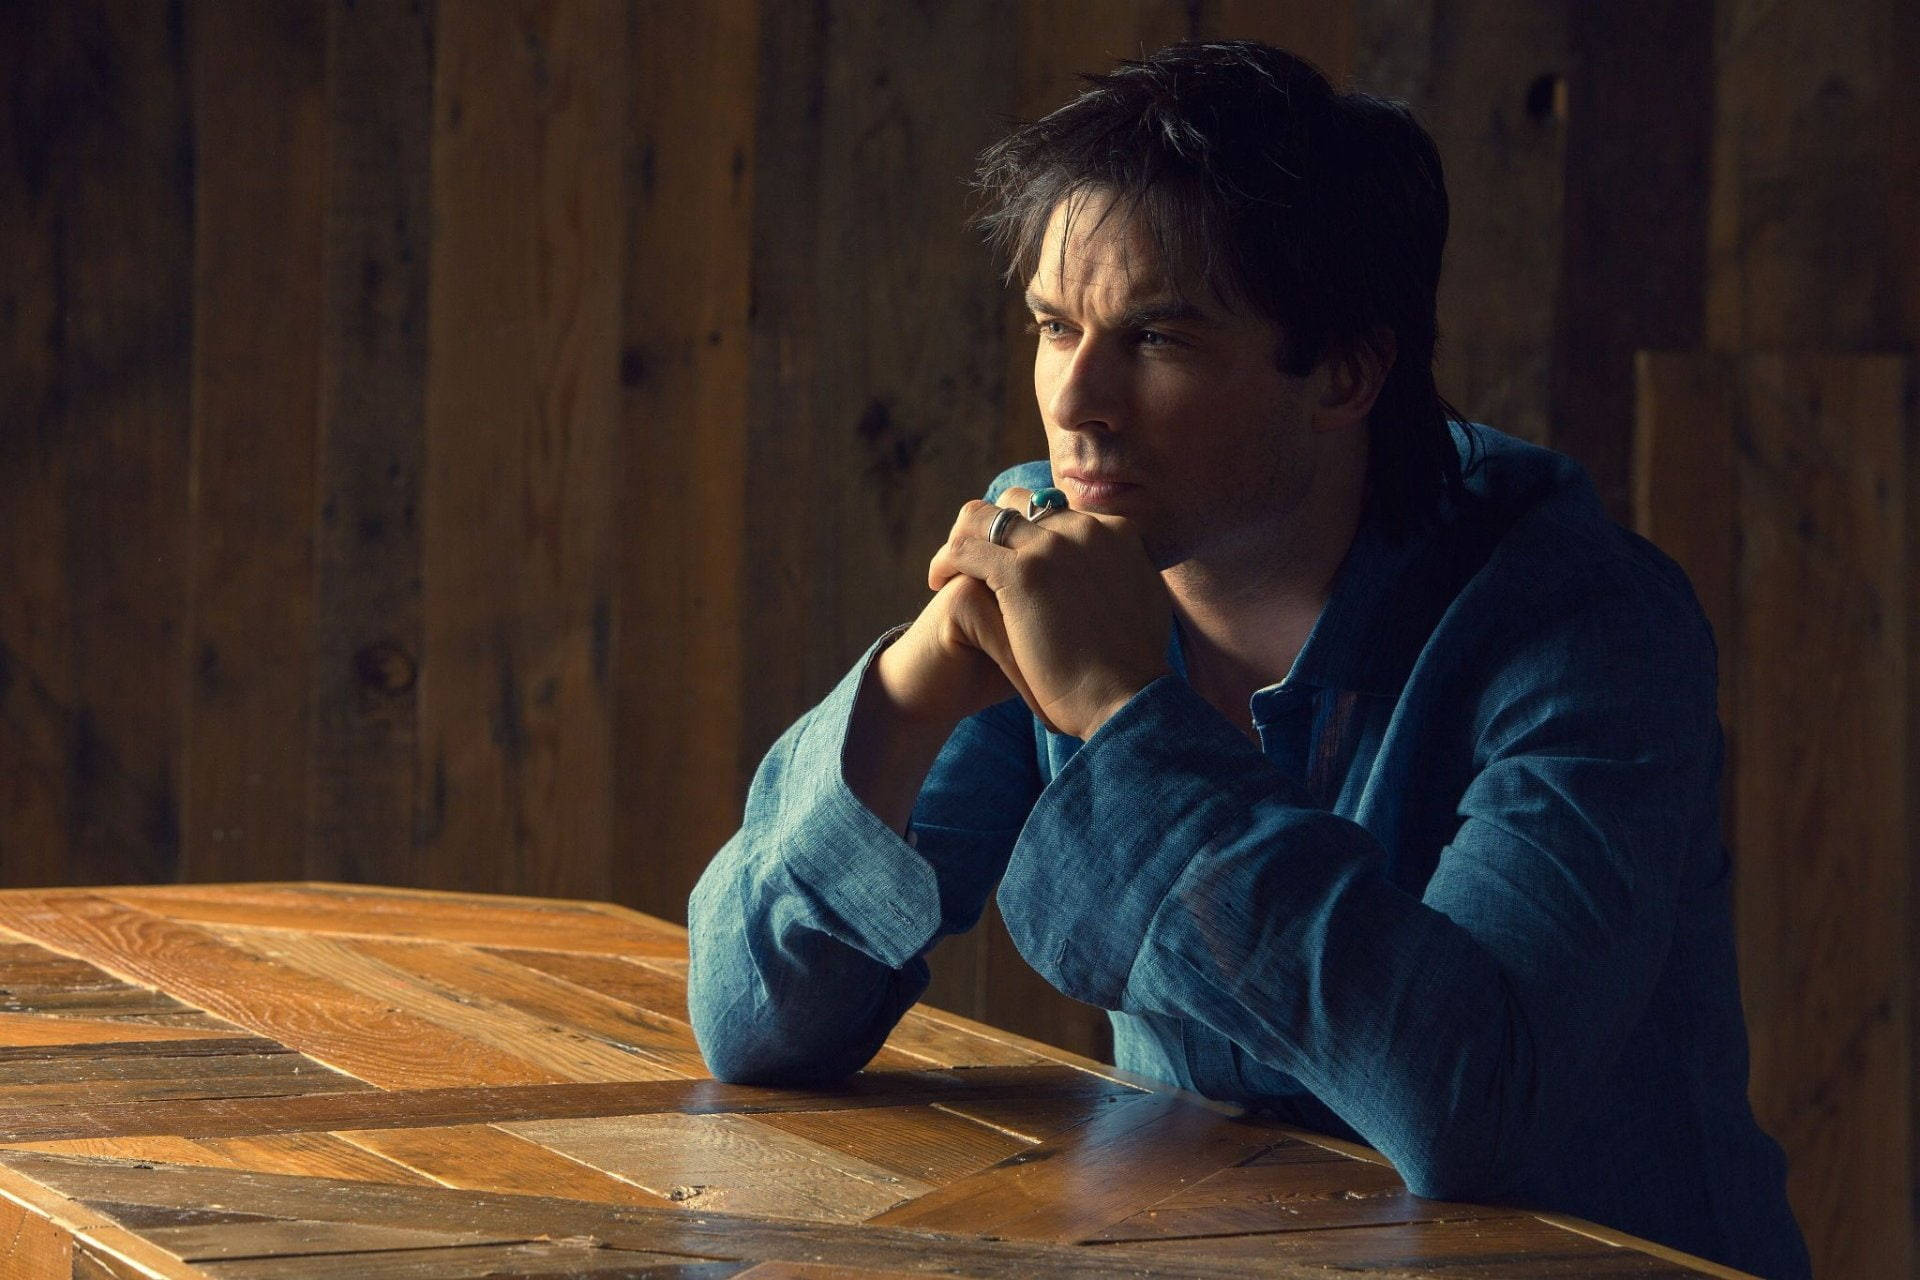 Ian Somerhalder At Wooden Table Pose Background